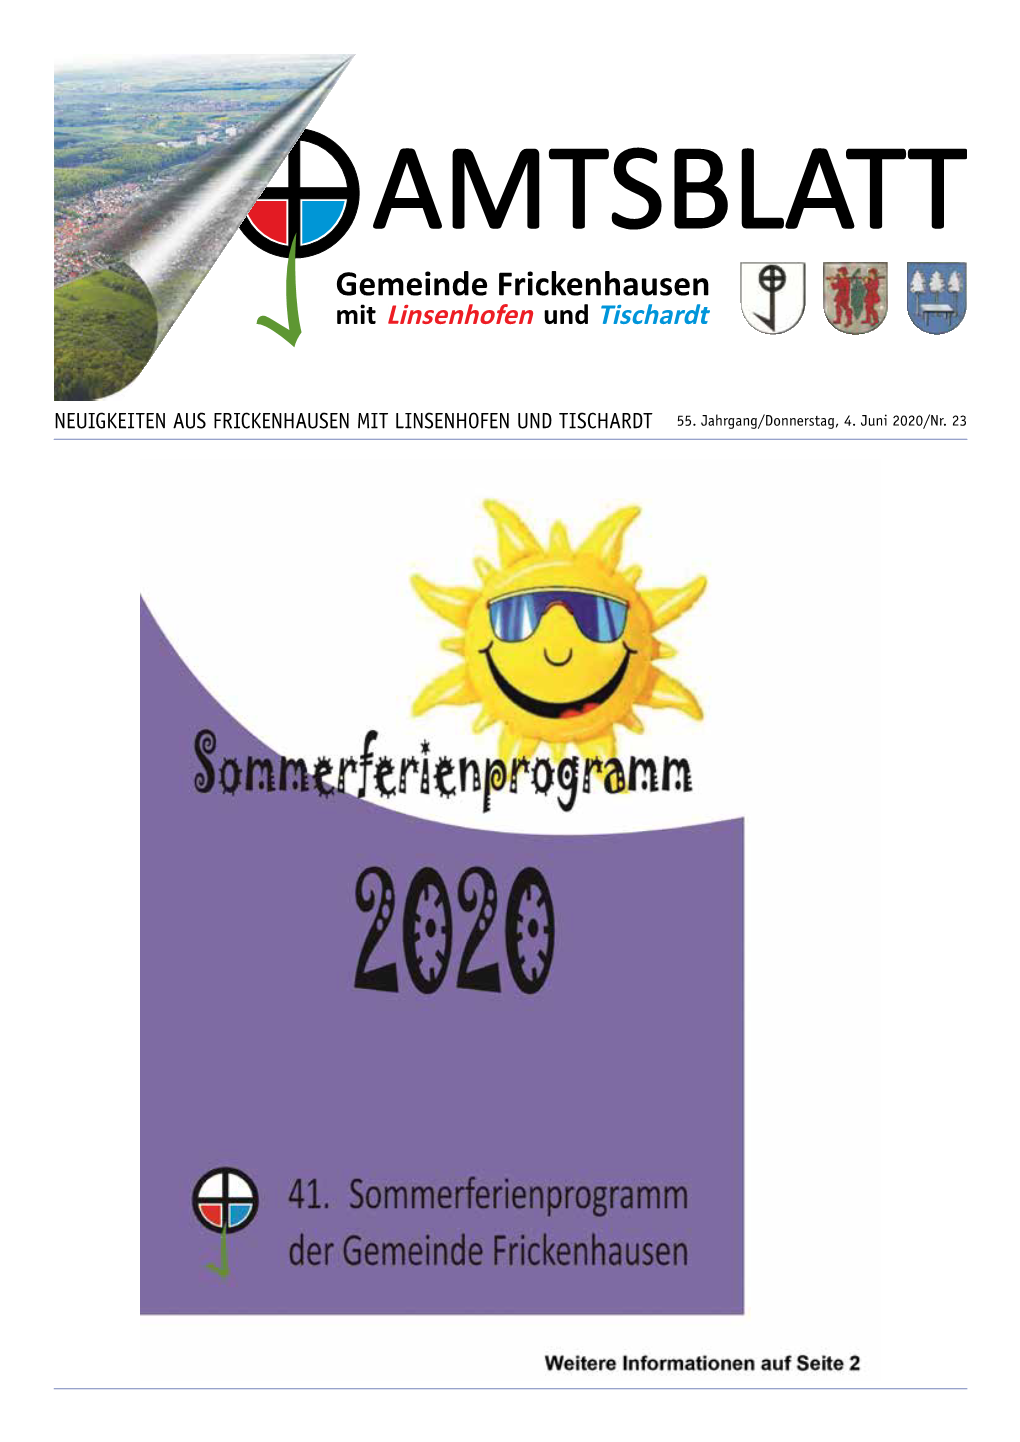 Amtsblatt-KW-23.Pdf